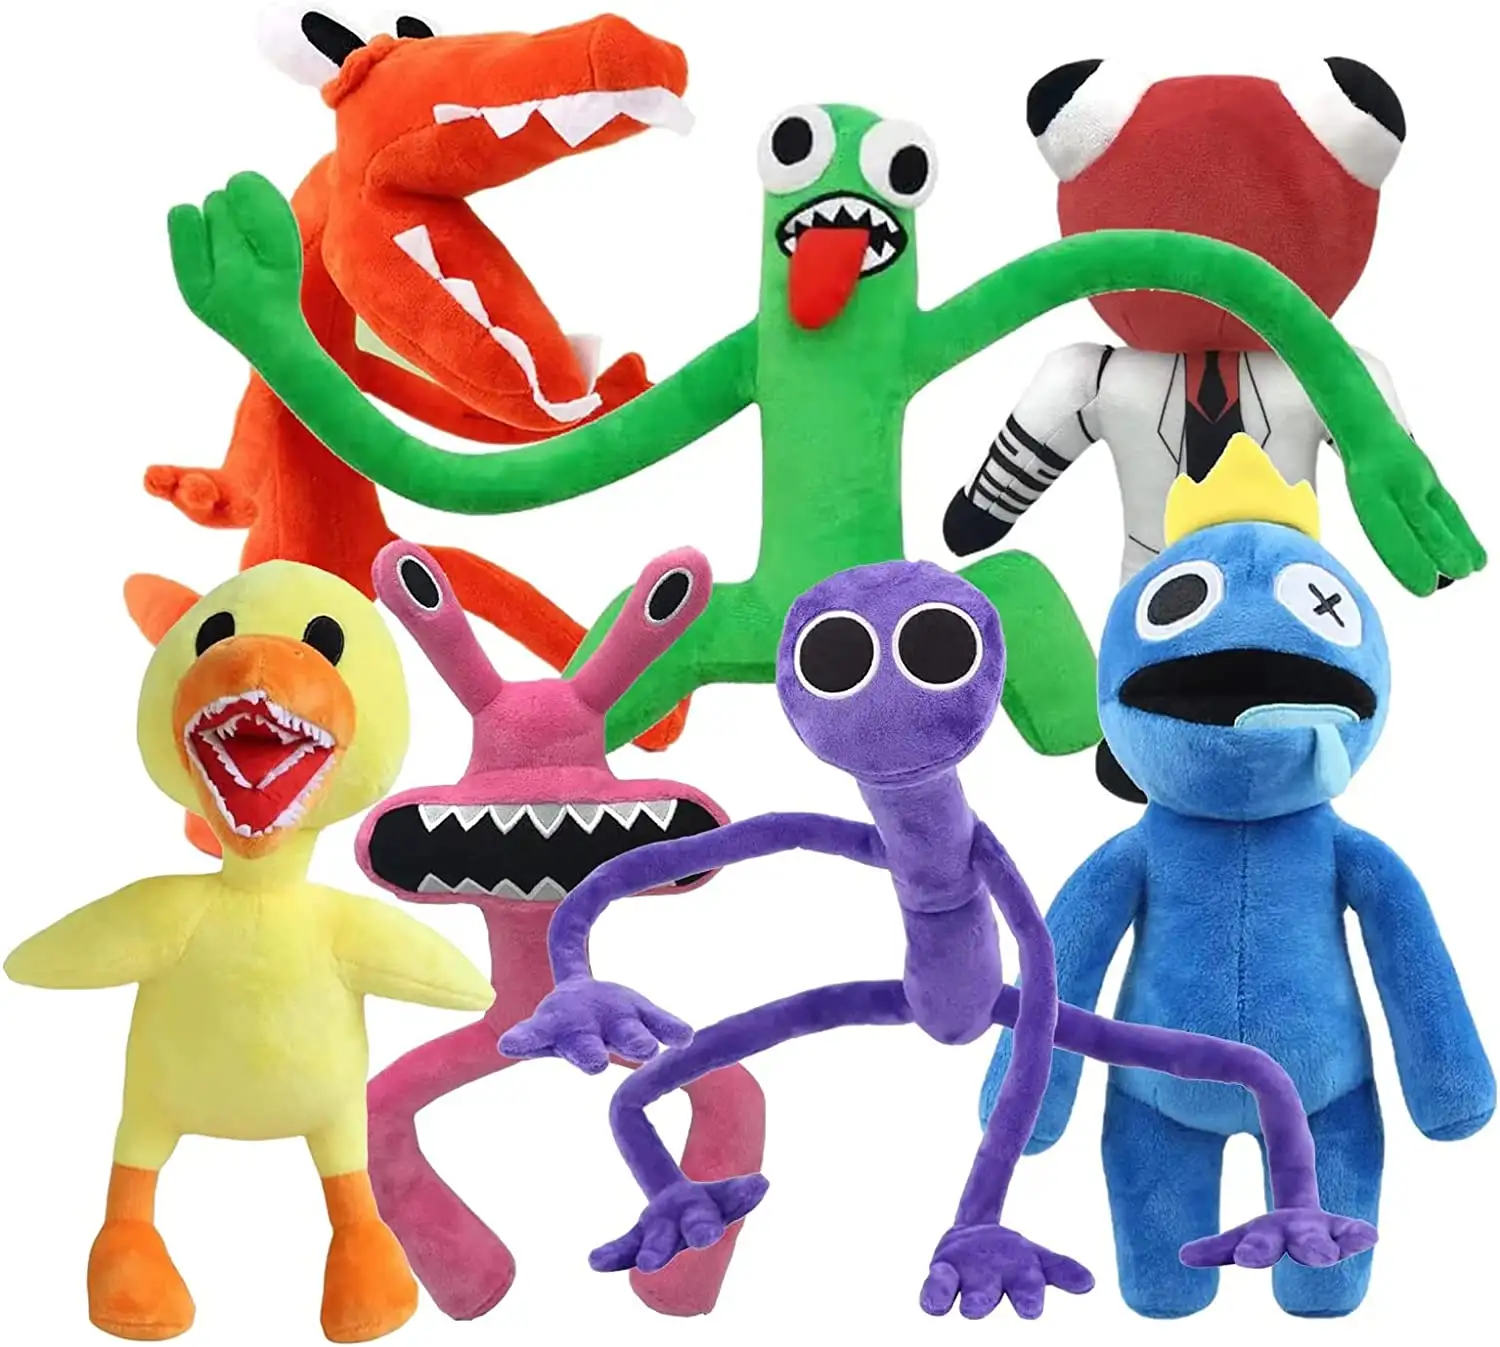 New Arrivals 30cm Rainbow Friends Plush Toy Cartoon Game Character Doll Kawaii Blue Monster Soft Stuffed Animal Toys